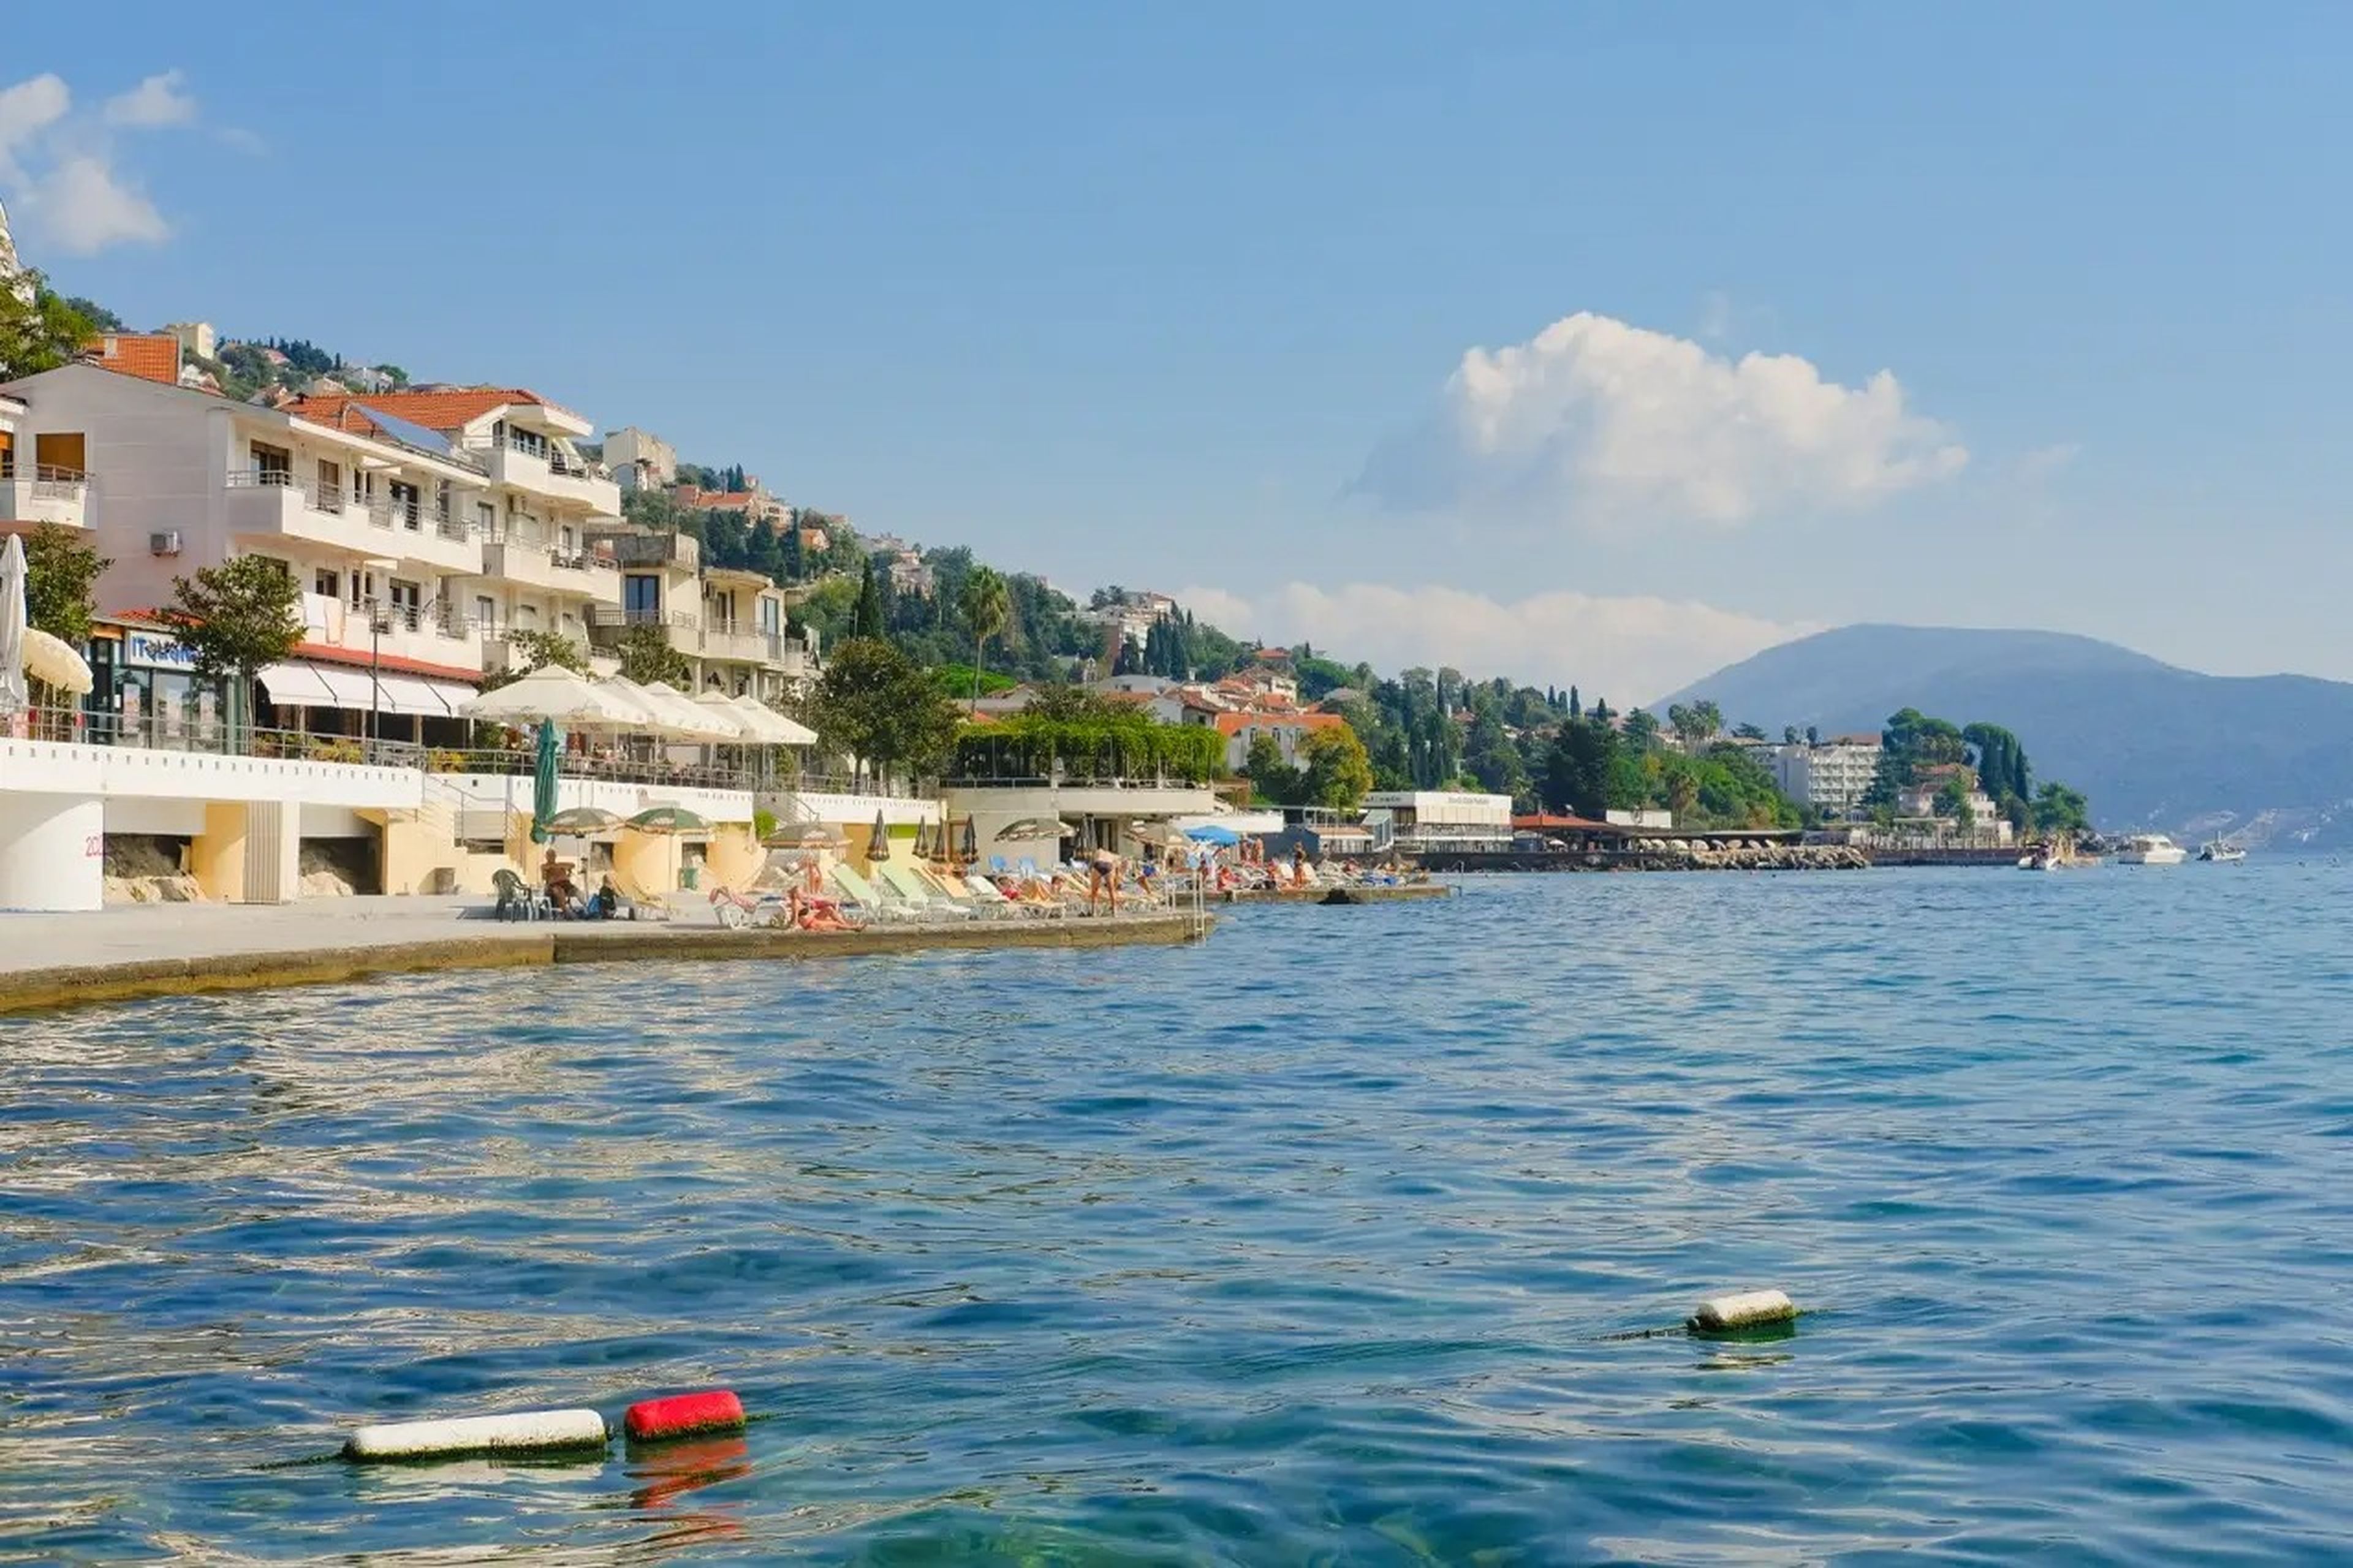 A beautiful beach town in Montenegro.